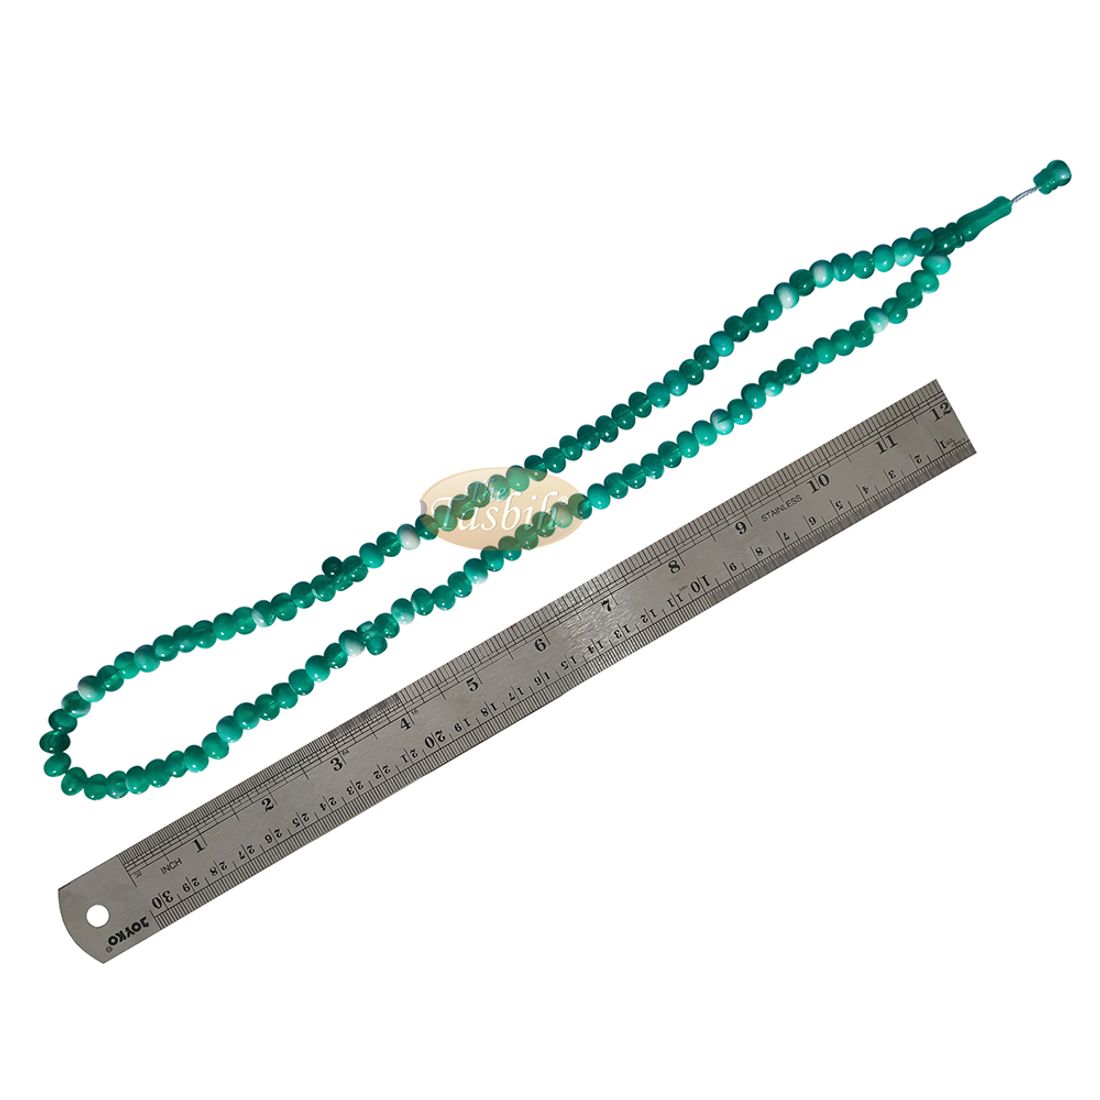 Muslim Prayer Beads – Marble Green 7x9mm Oval Plastic Beads 99ct Dhikr Tasbih Sibha